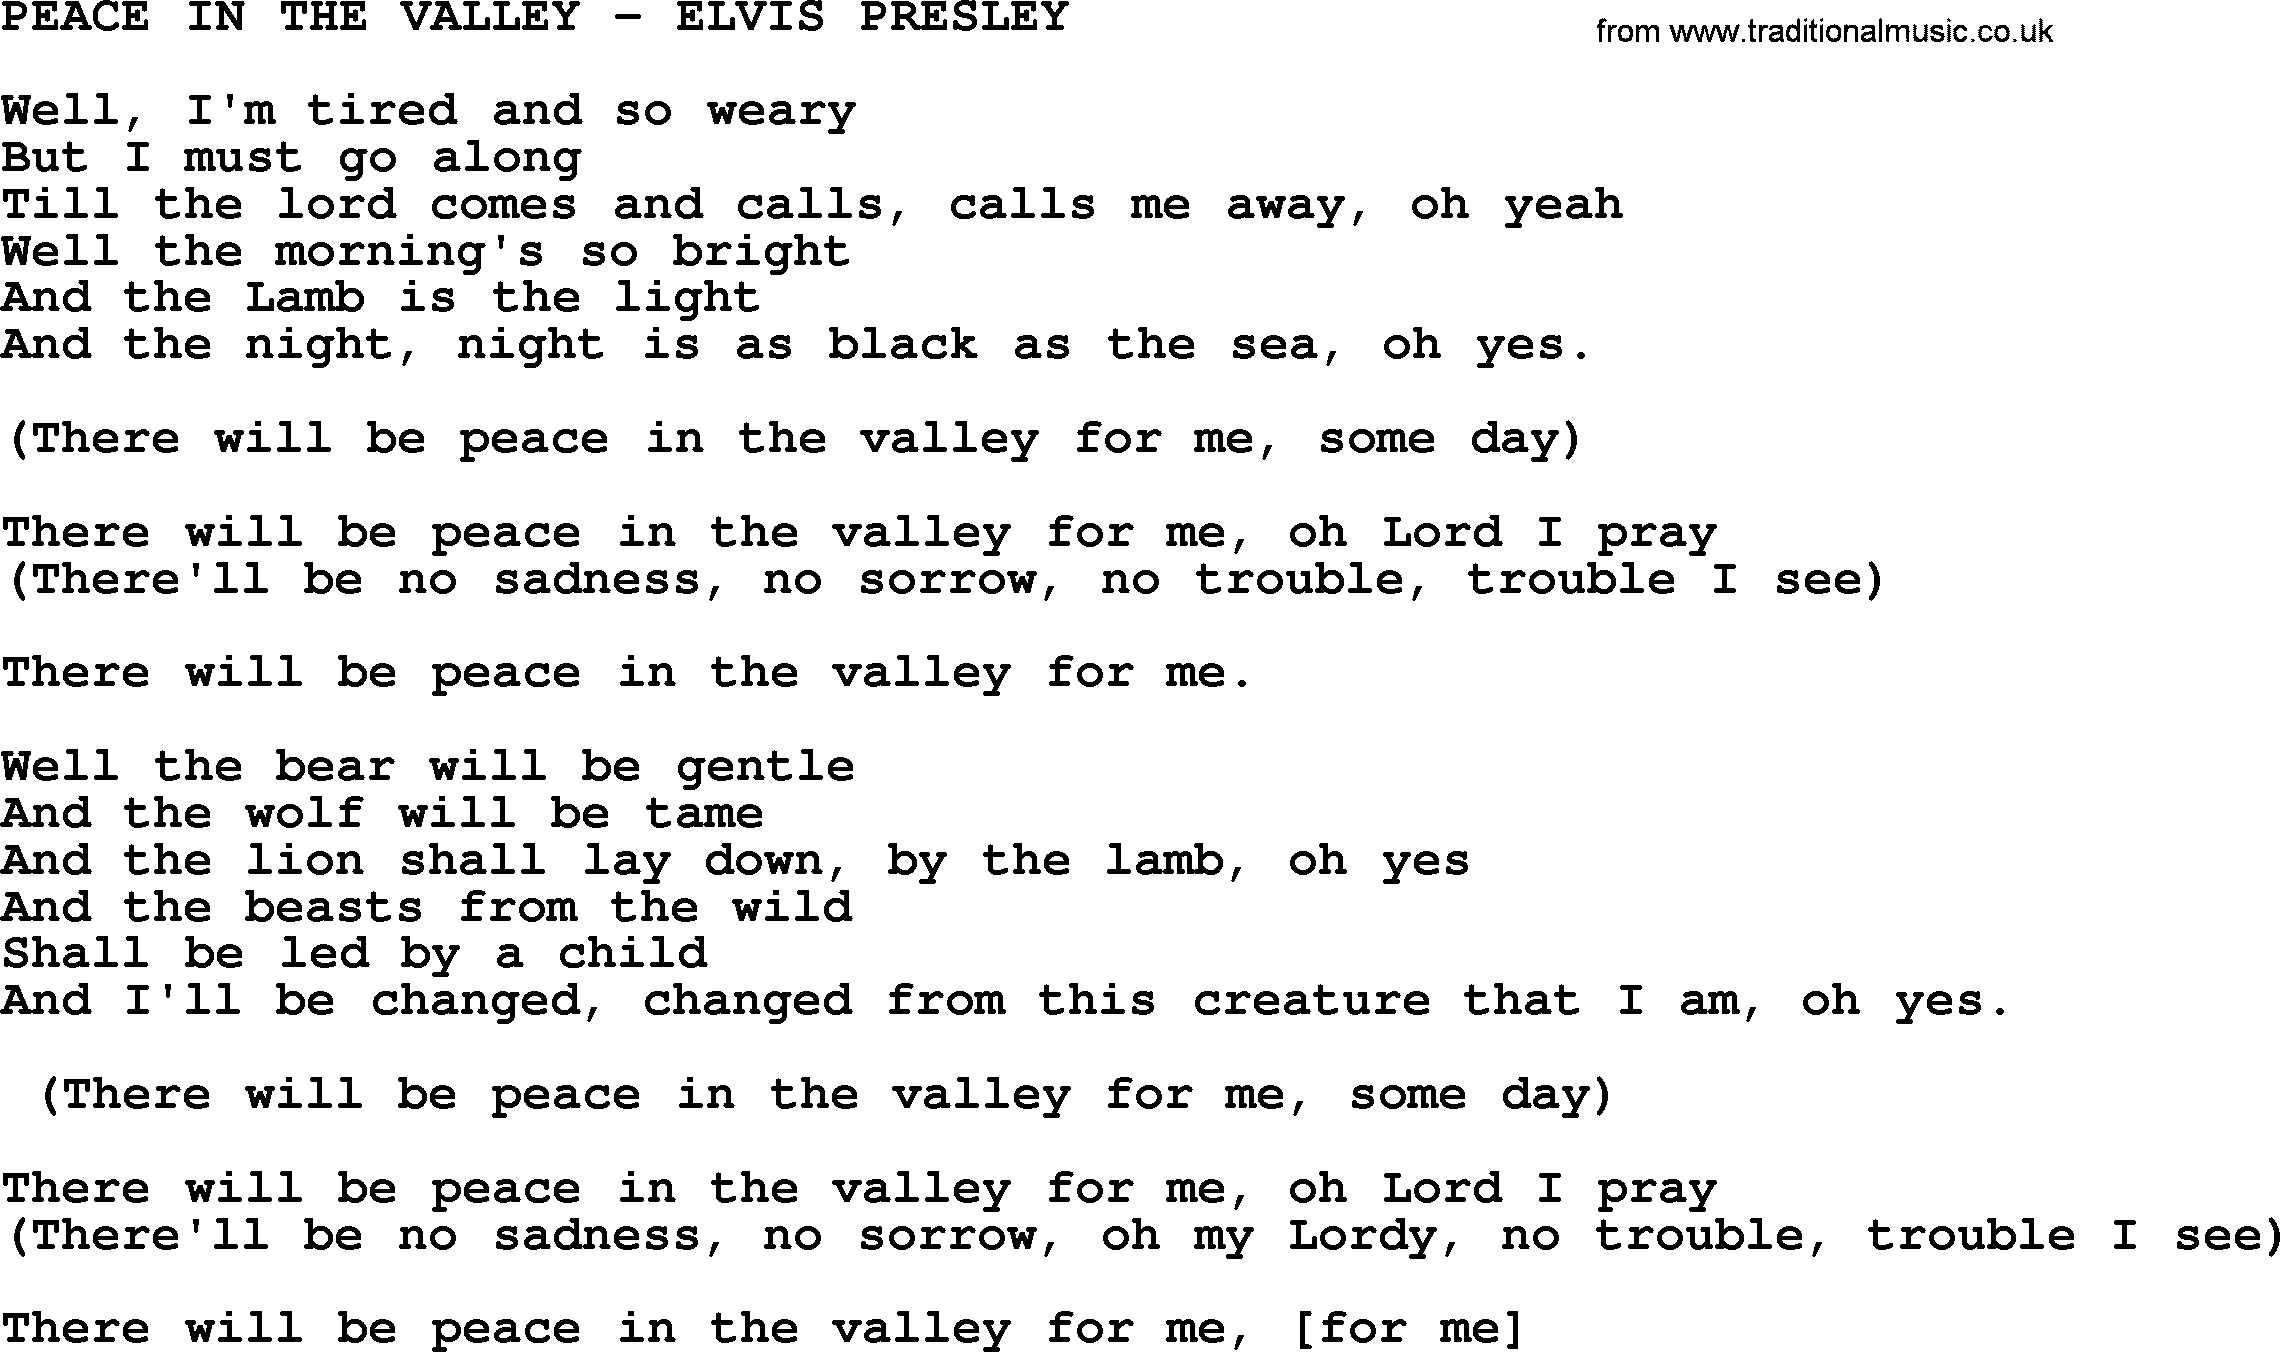 Elvis Presley song: Peace In The Valley-Elvis Presley-.txt lyrics and chords